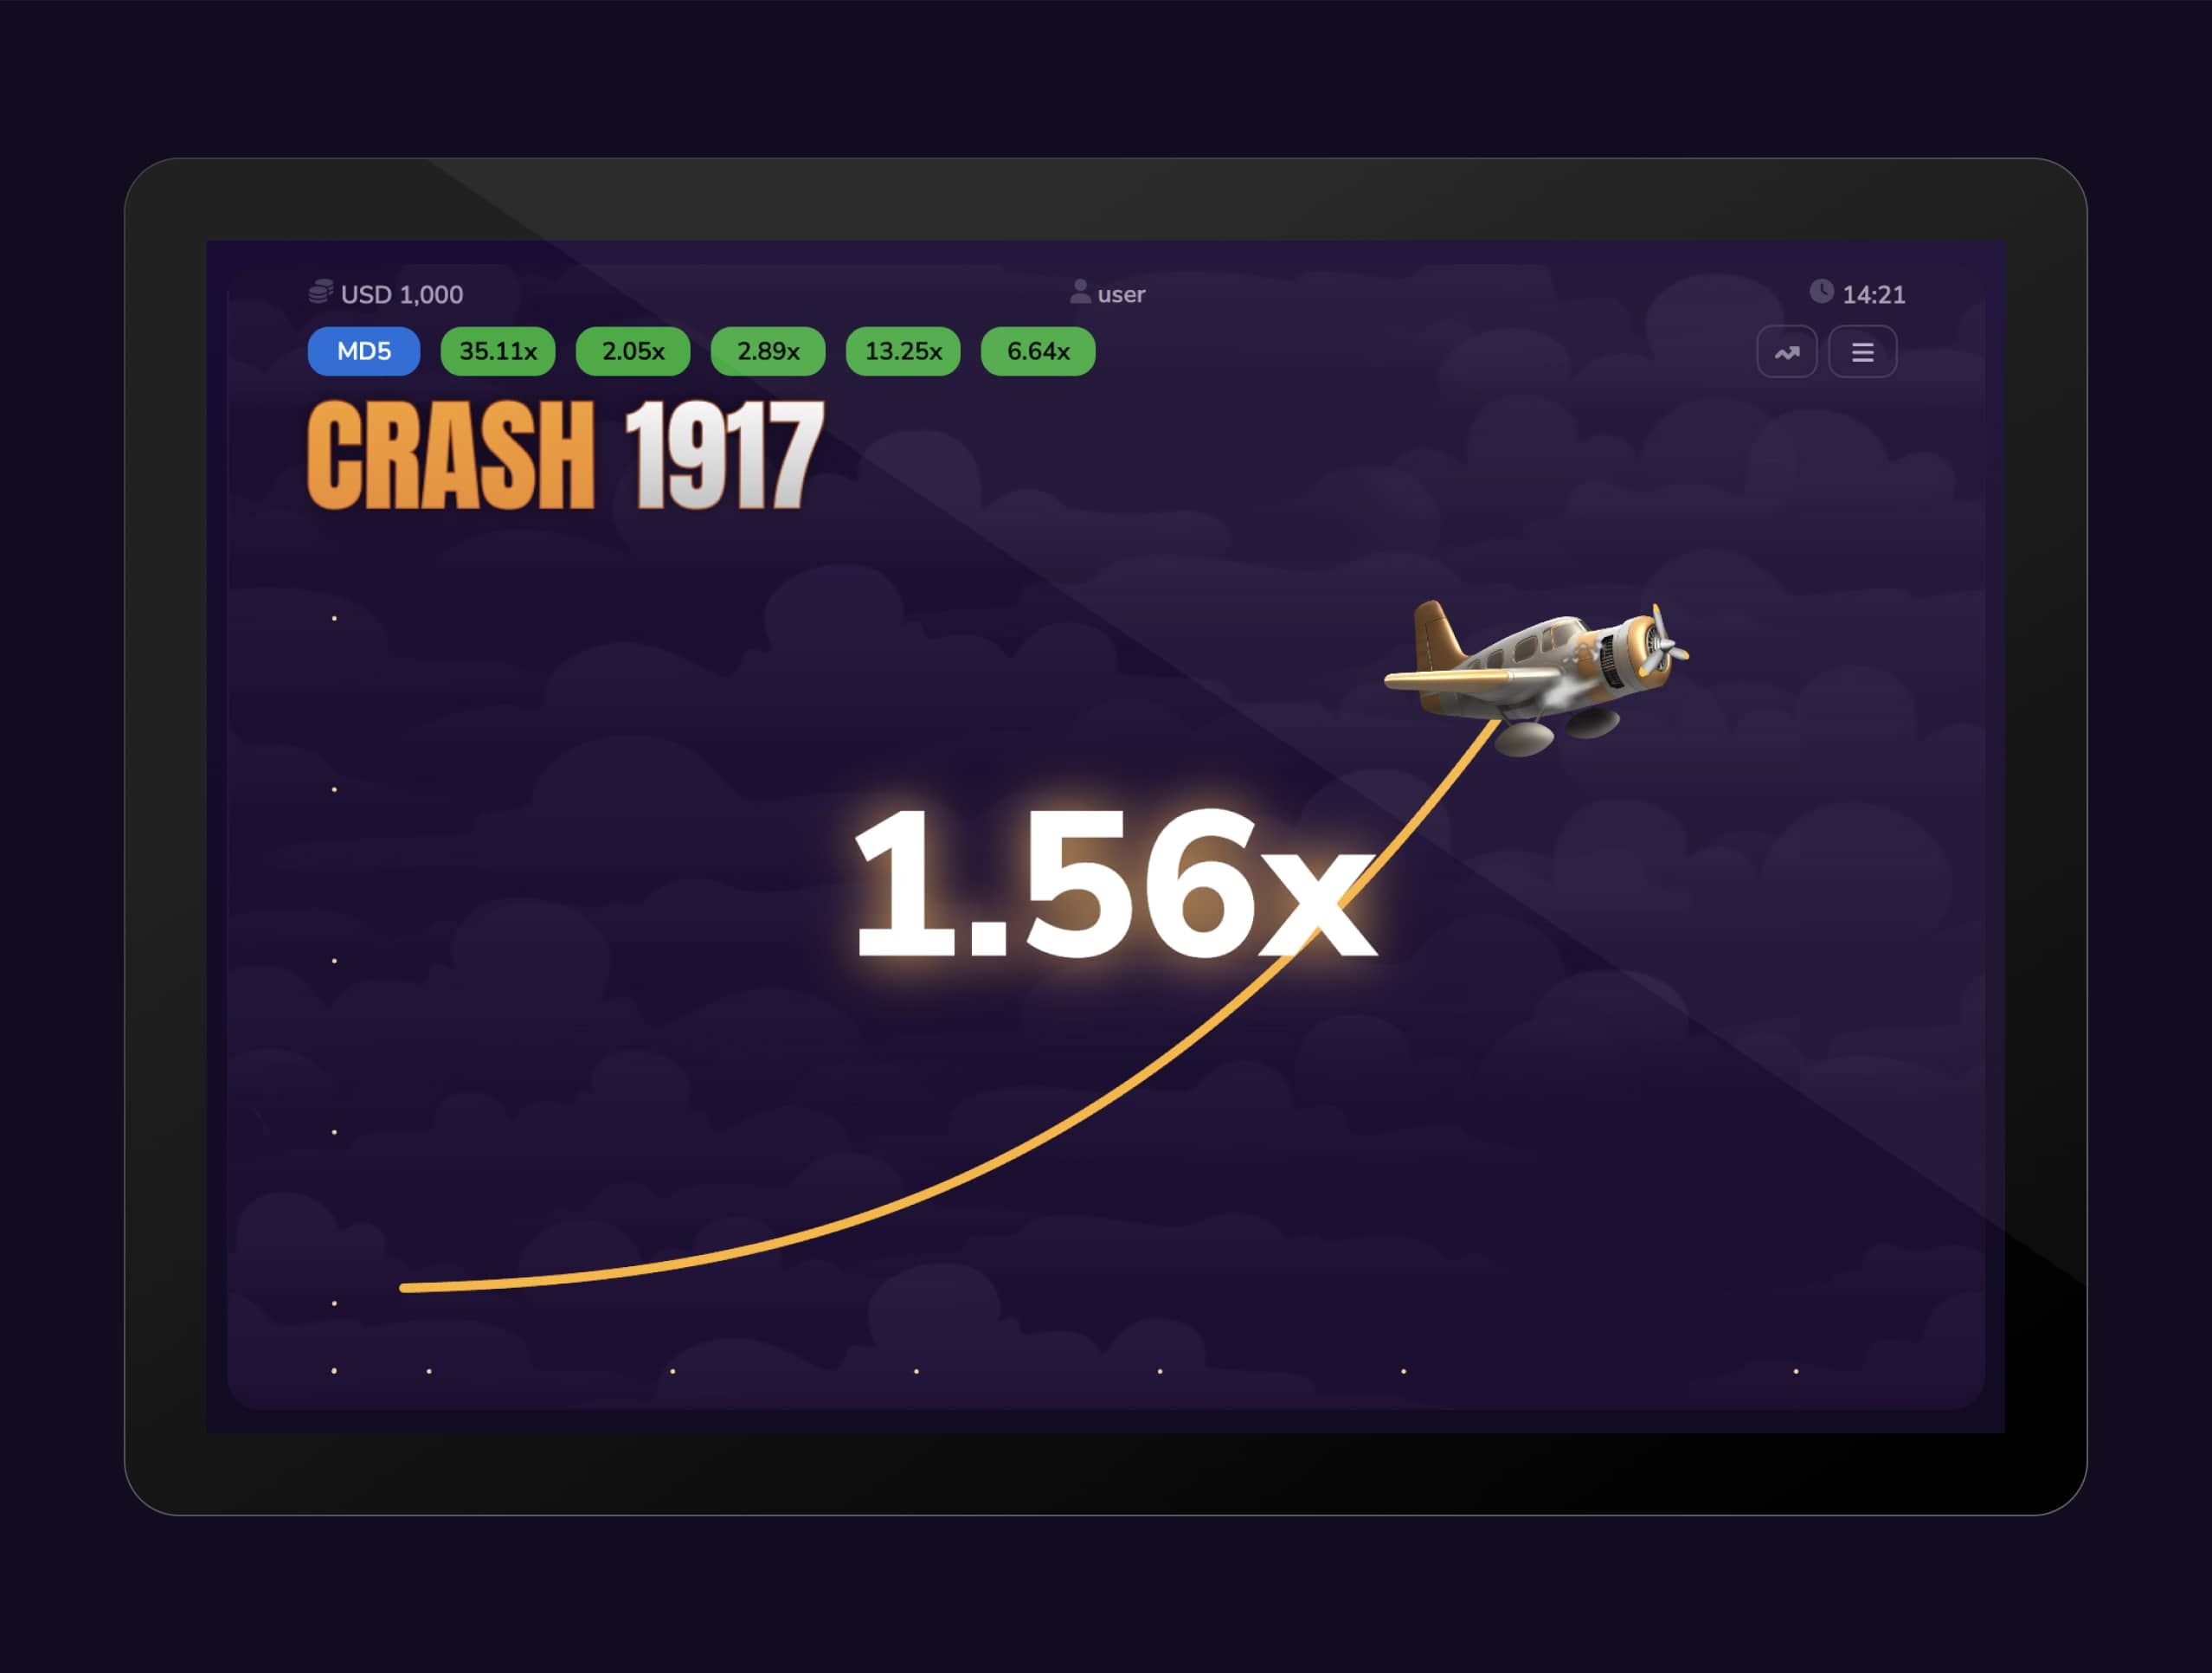 Crash 1917 - Overview Gameplay Image